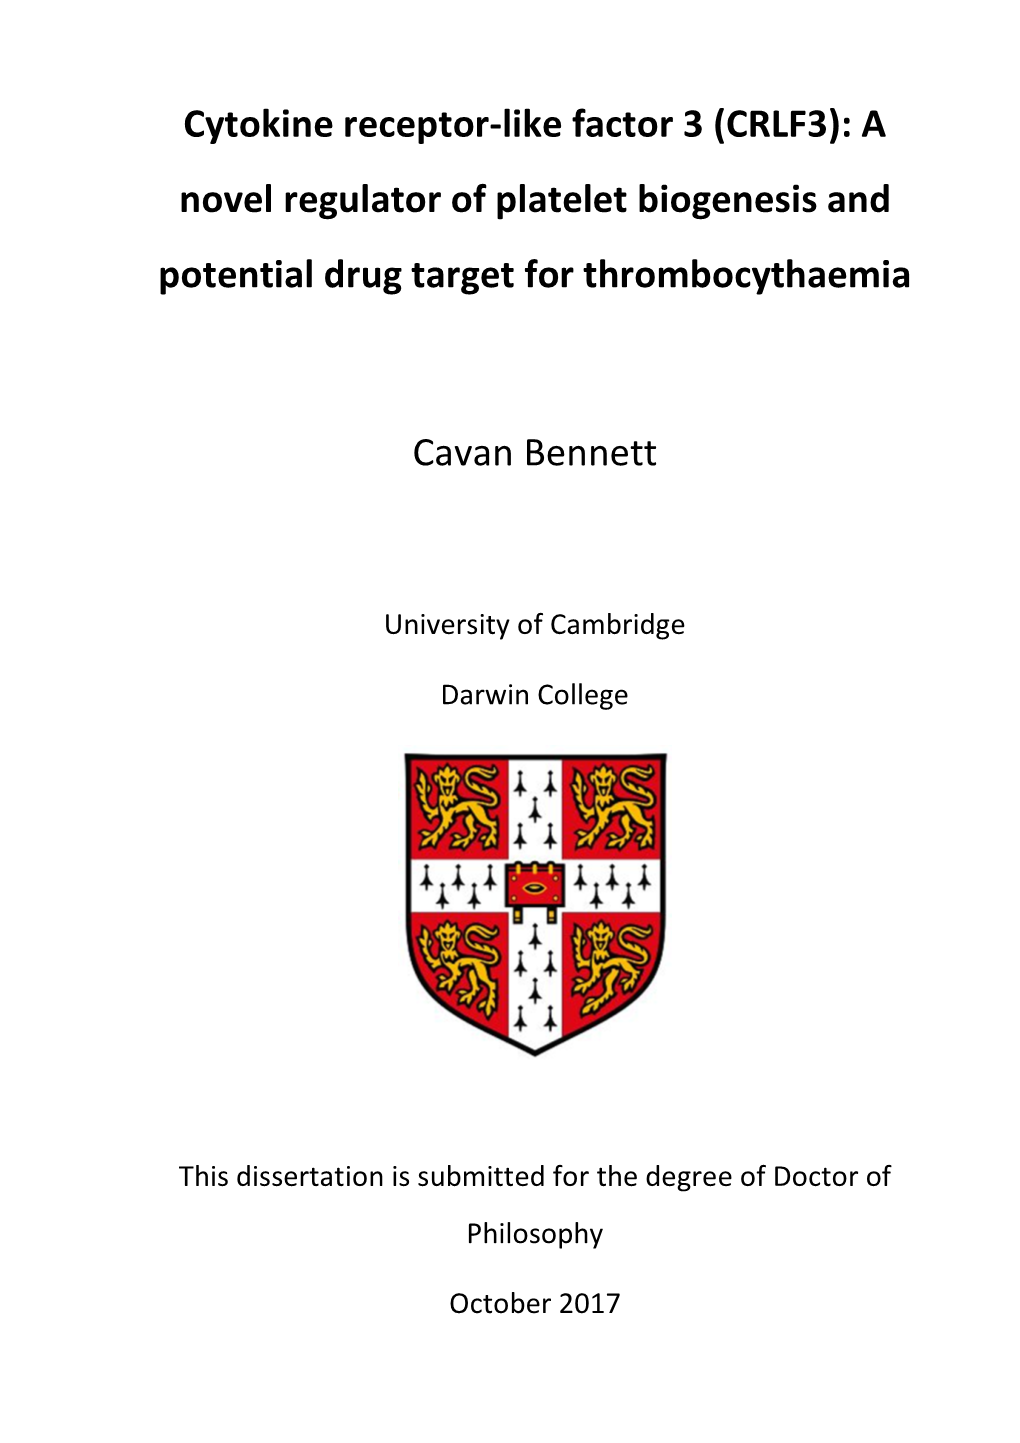 CRLF3): a Novel Regulator of Platelet Biogenesis and Potential Drug Target for Thrombocythaemia